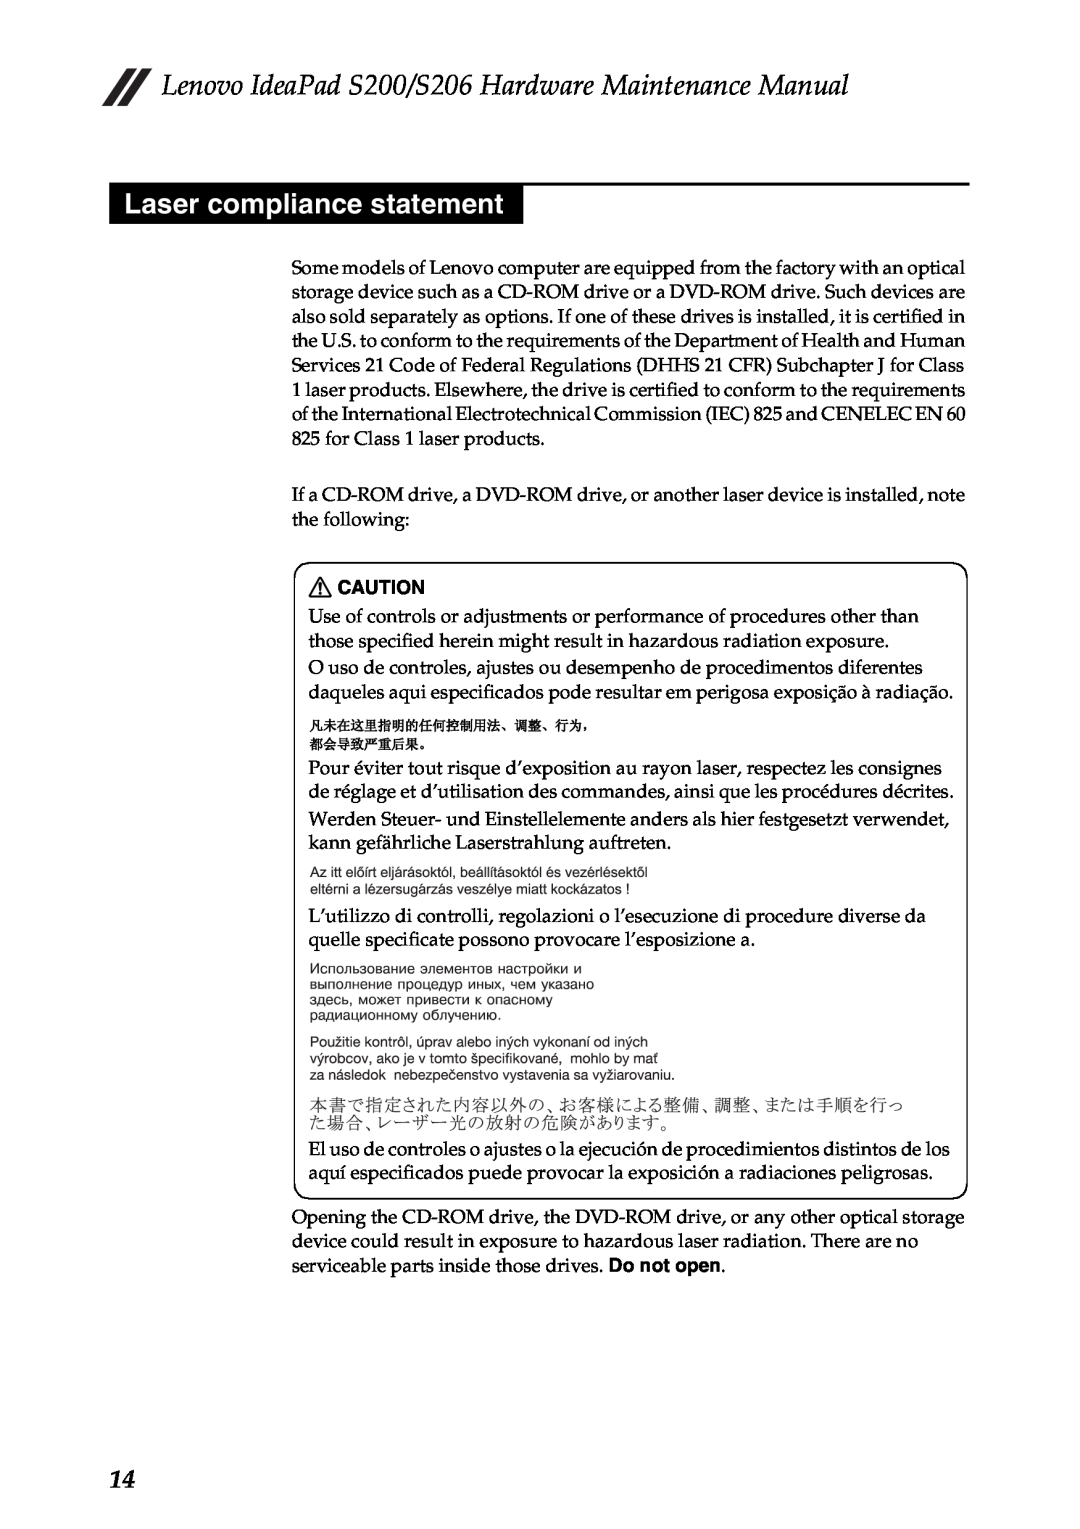 Lenovo S206, S200 manual Laser compliance statement 